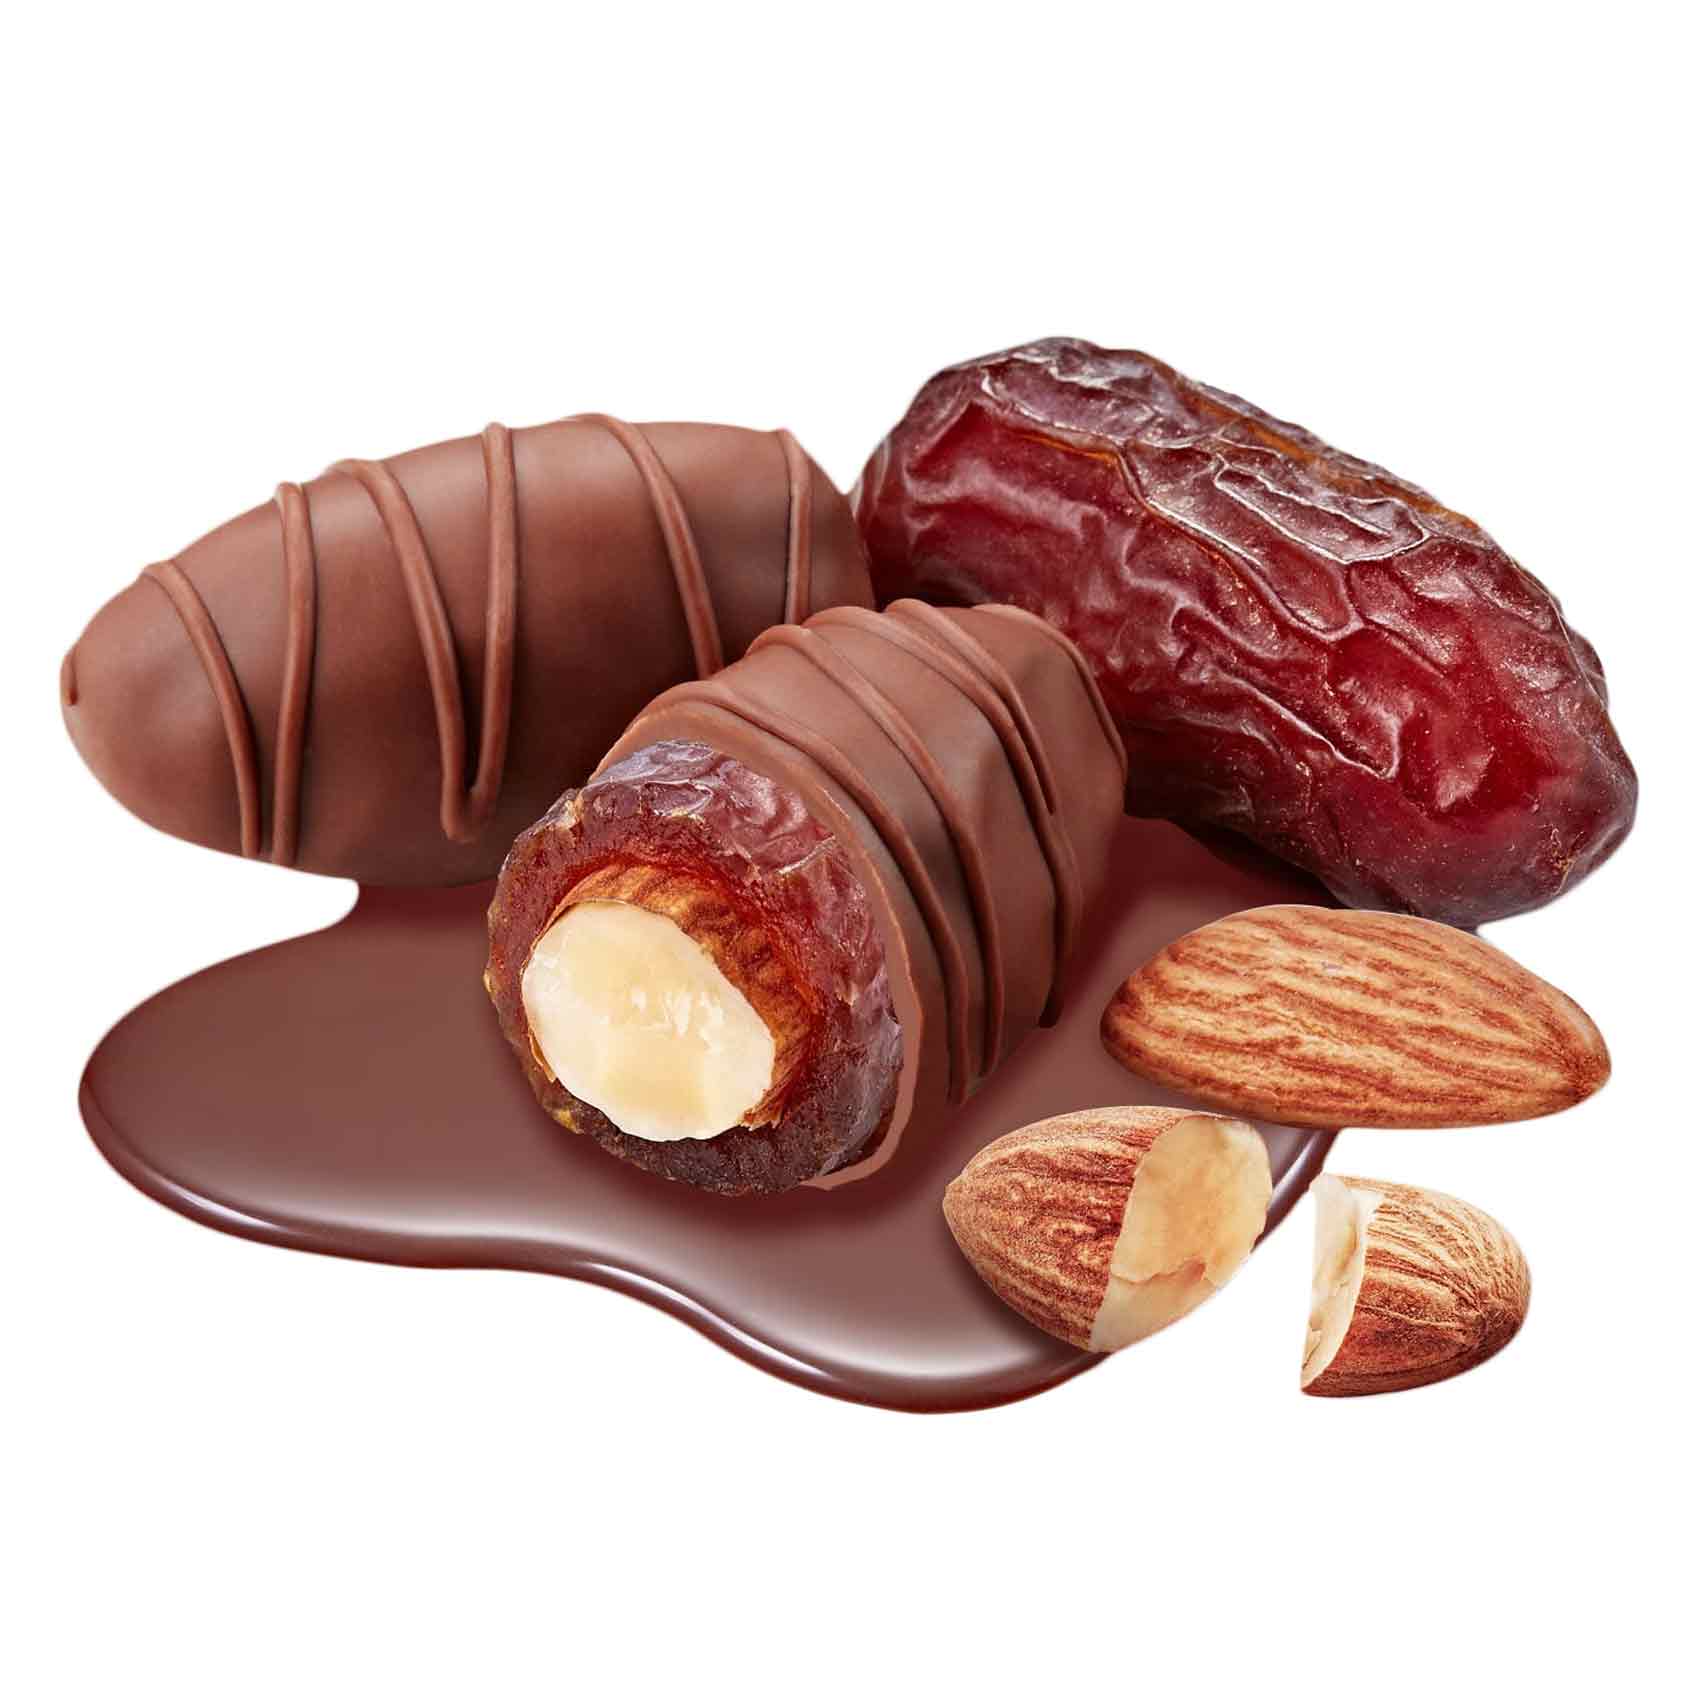 Chocodate Milk Chocolate Dates With Almonds 100g